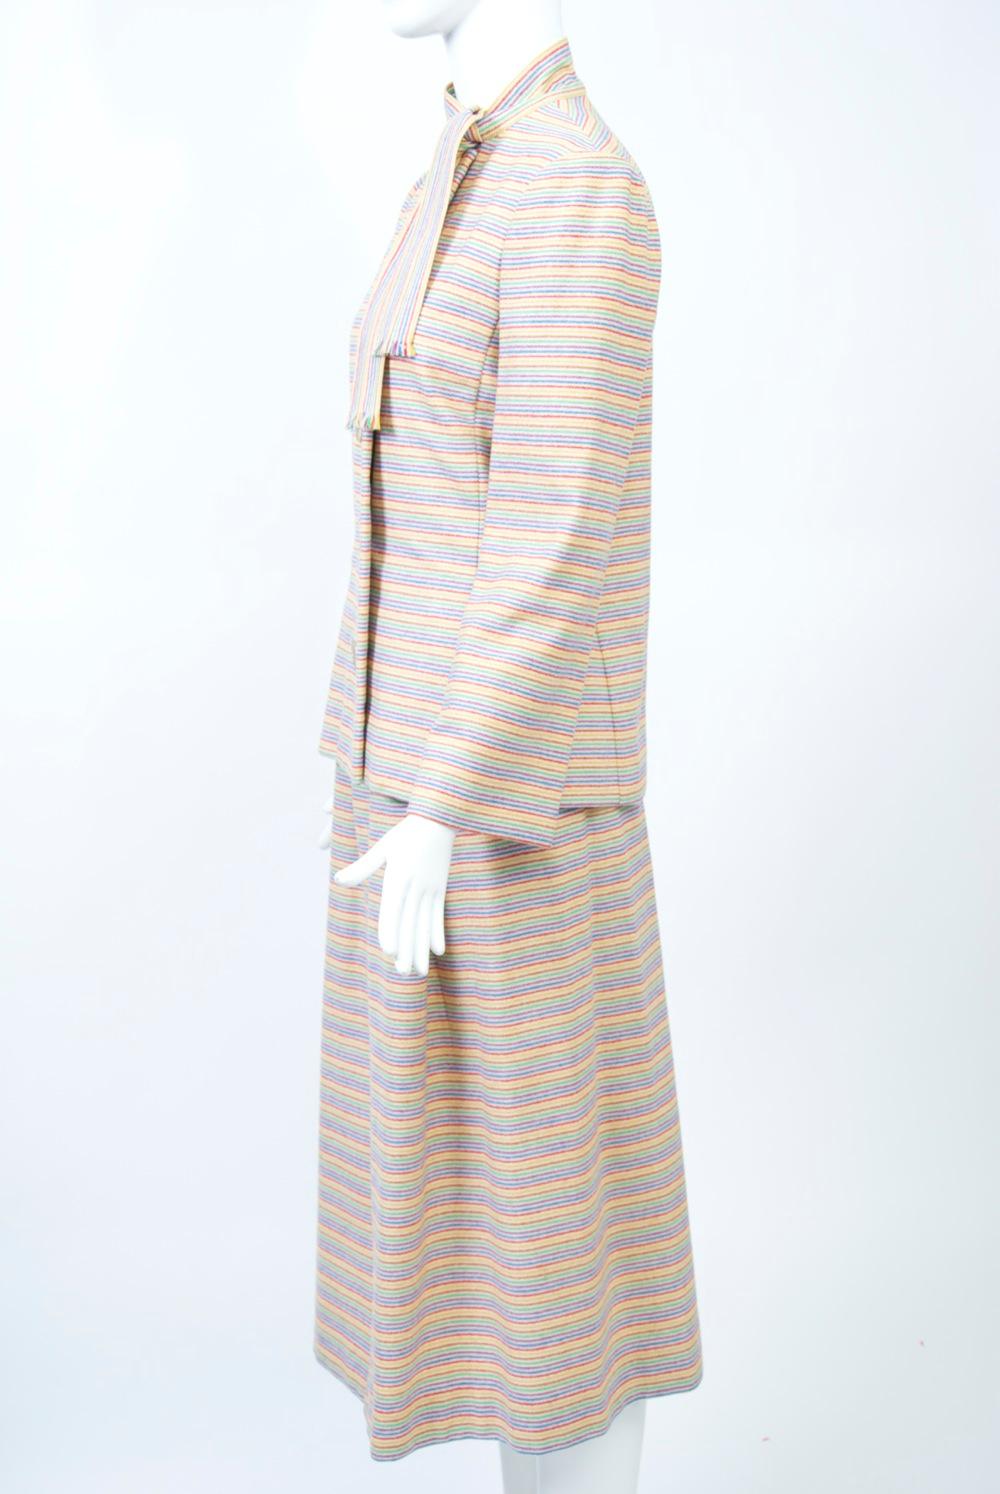 Pauline Trigère Striped Wool Suit 3